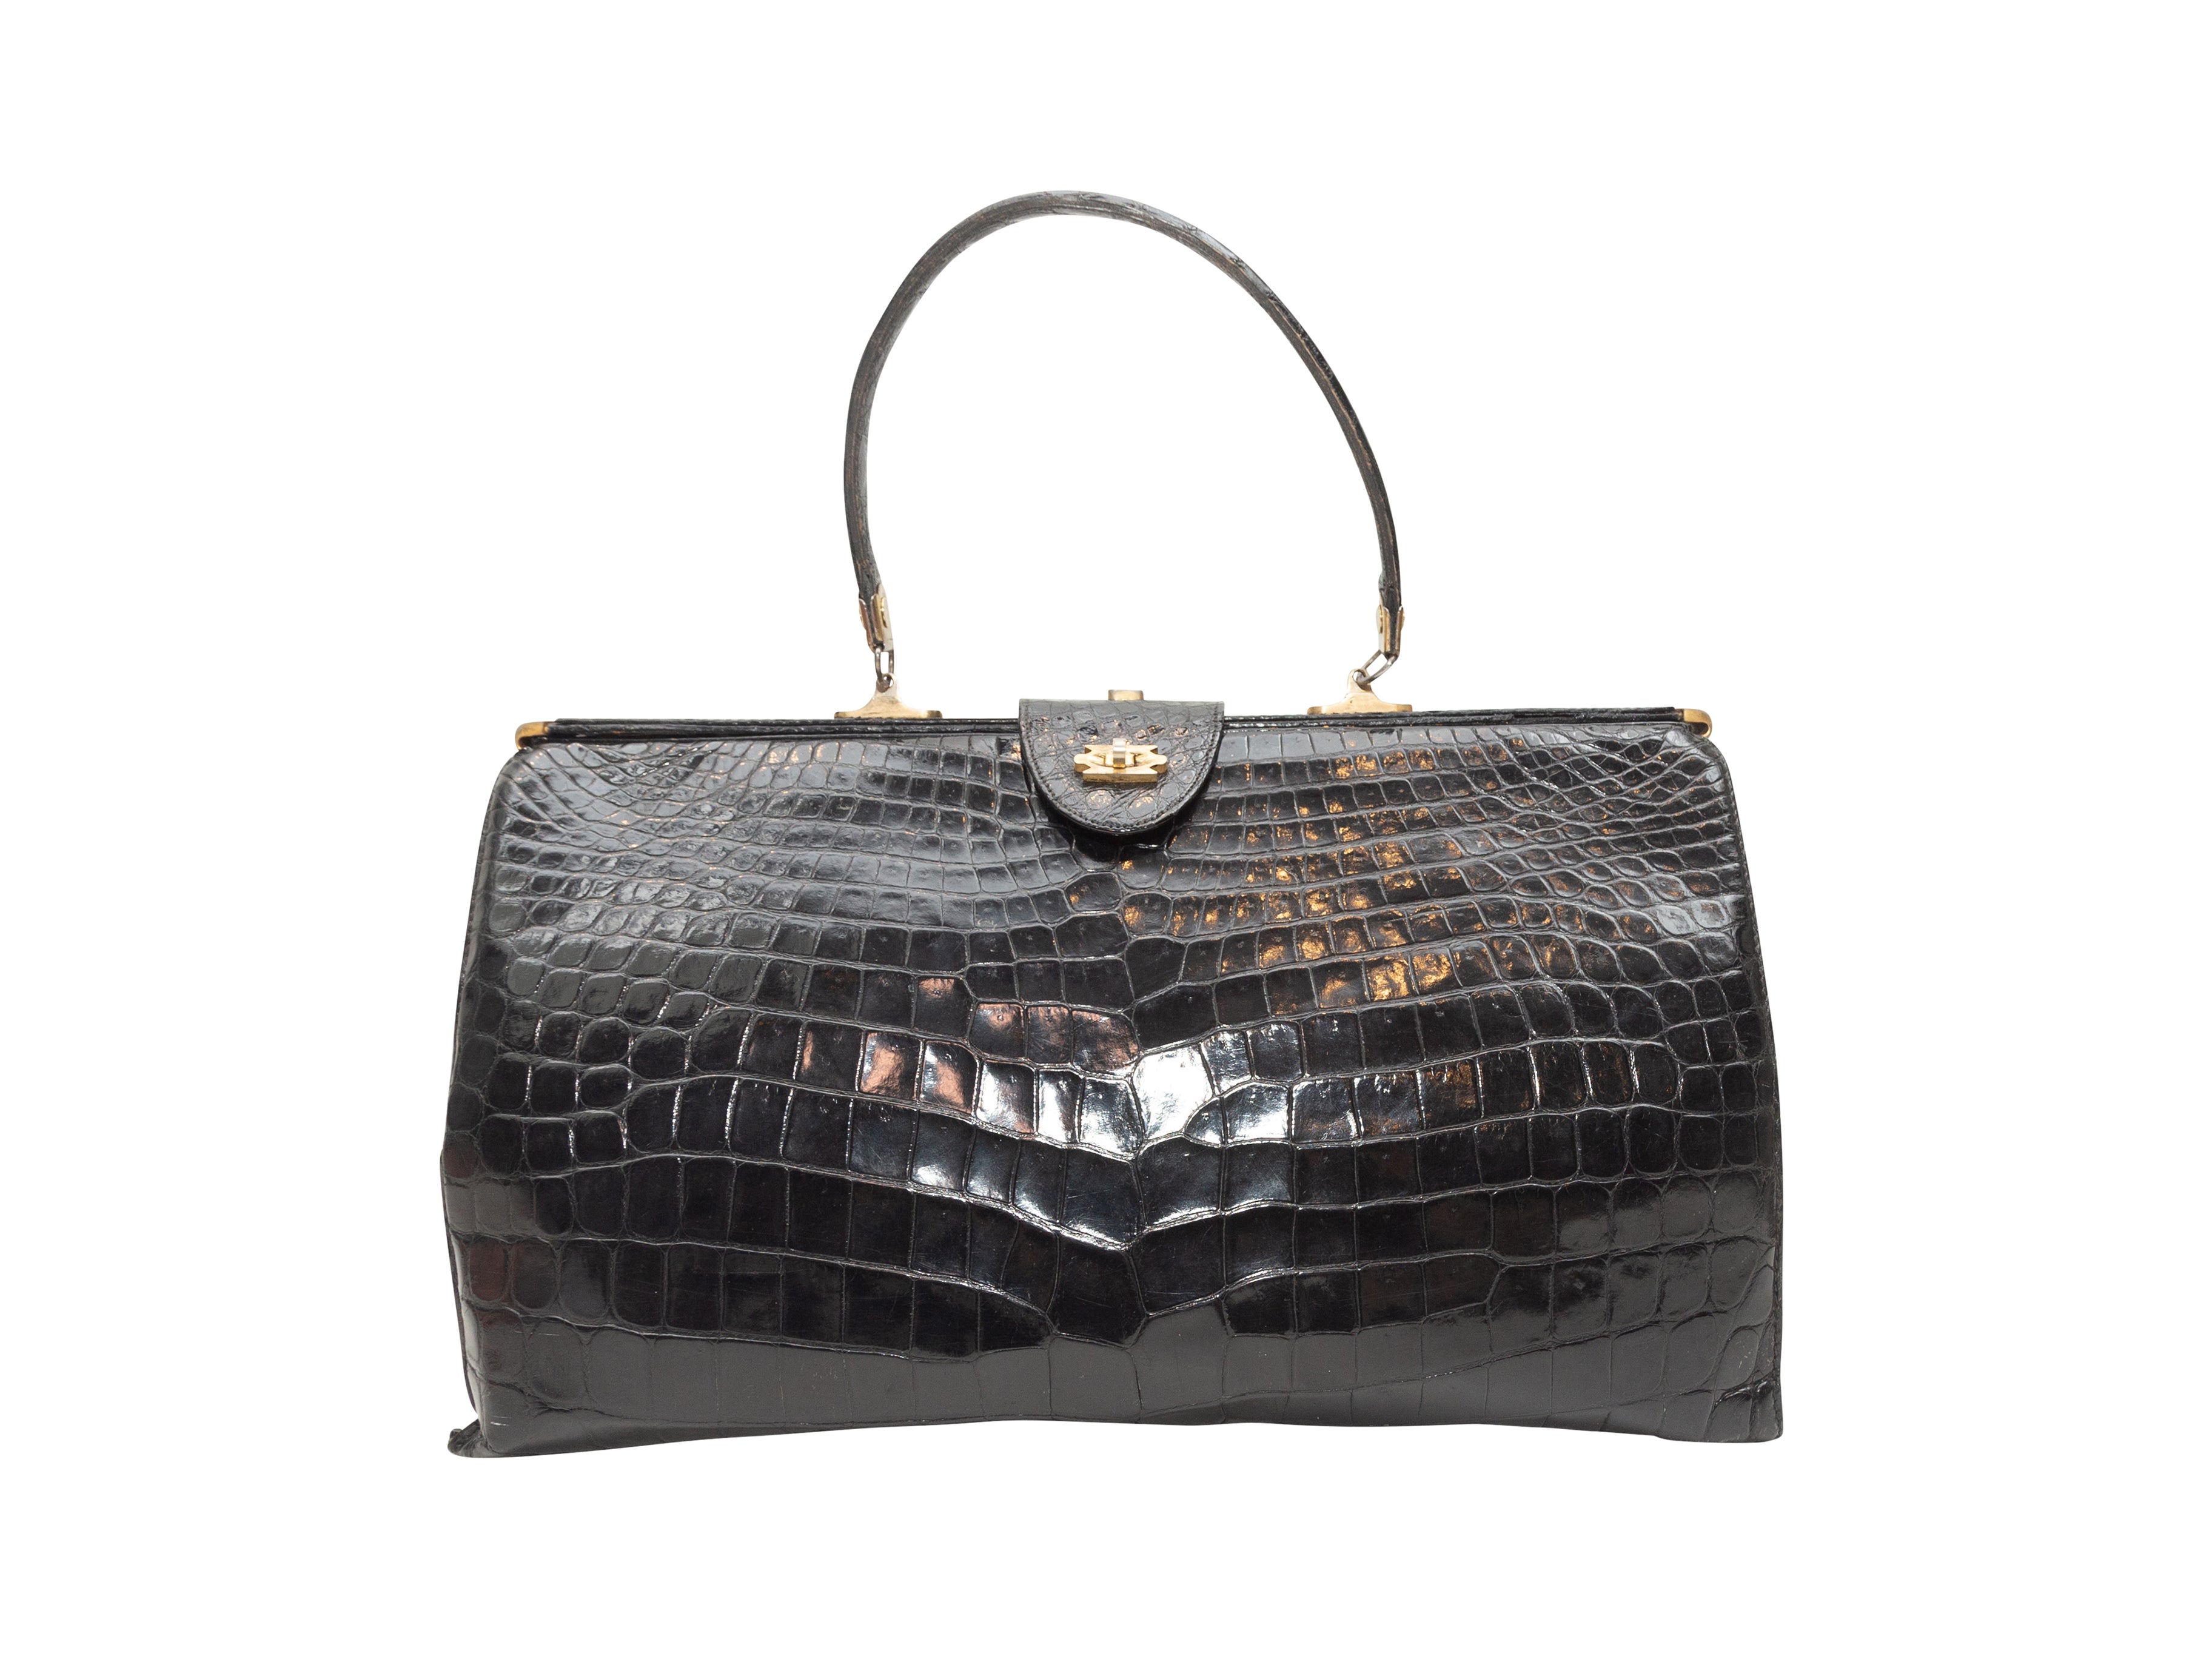 Small Leather Clutch Bag - Von Baer, Elegant Black (Croc Print)